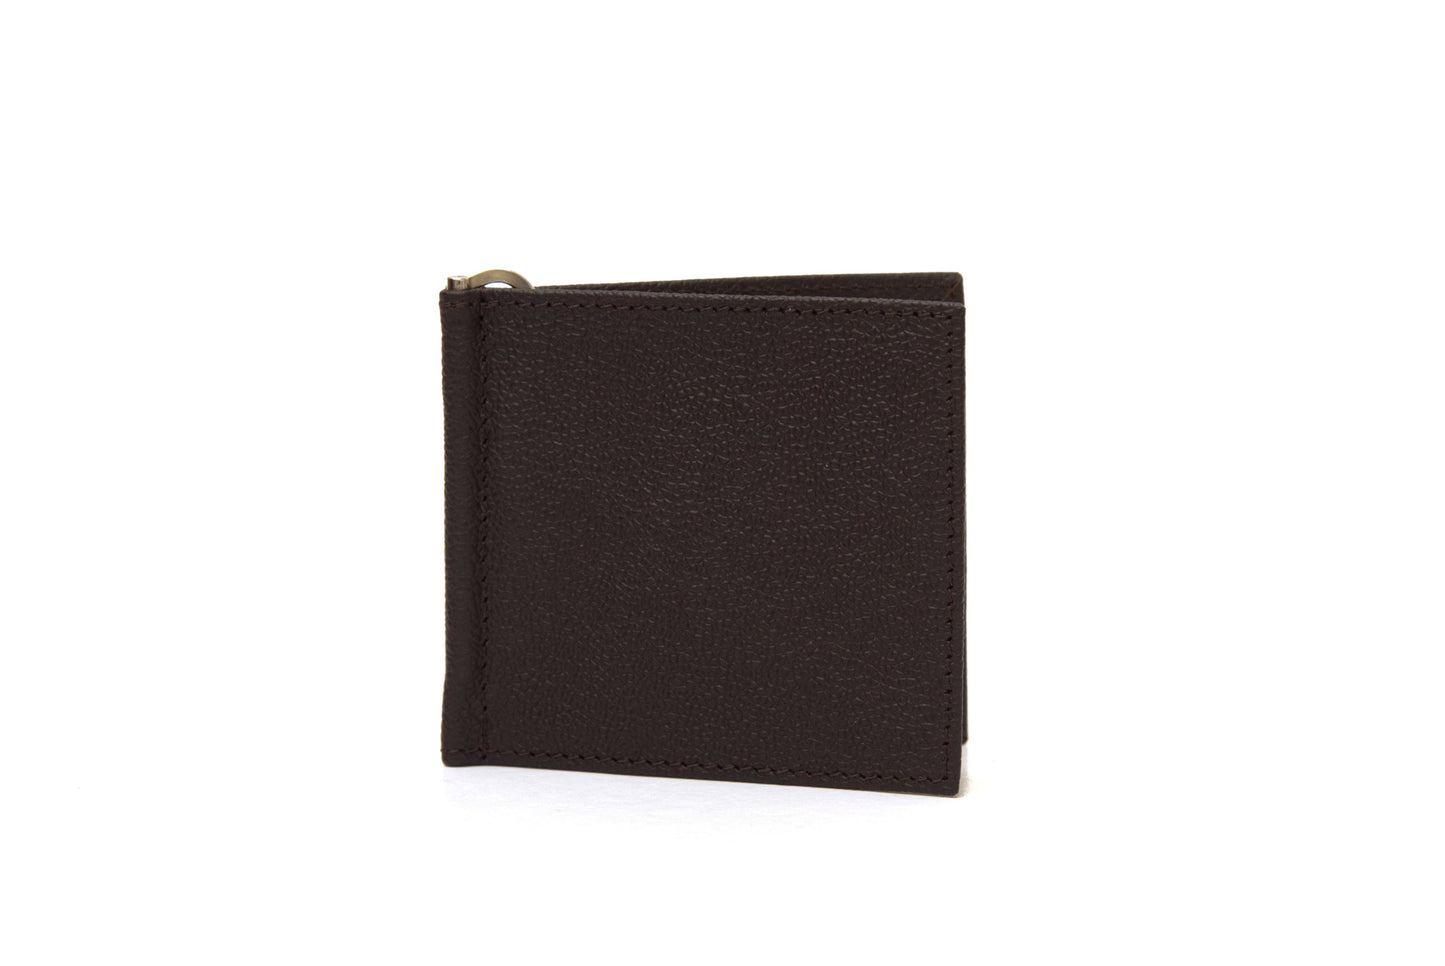 Clip Wallet by  Adelphi.